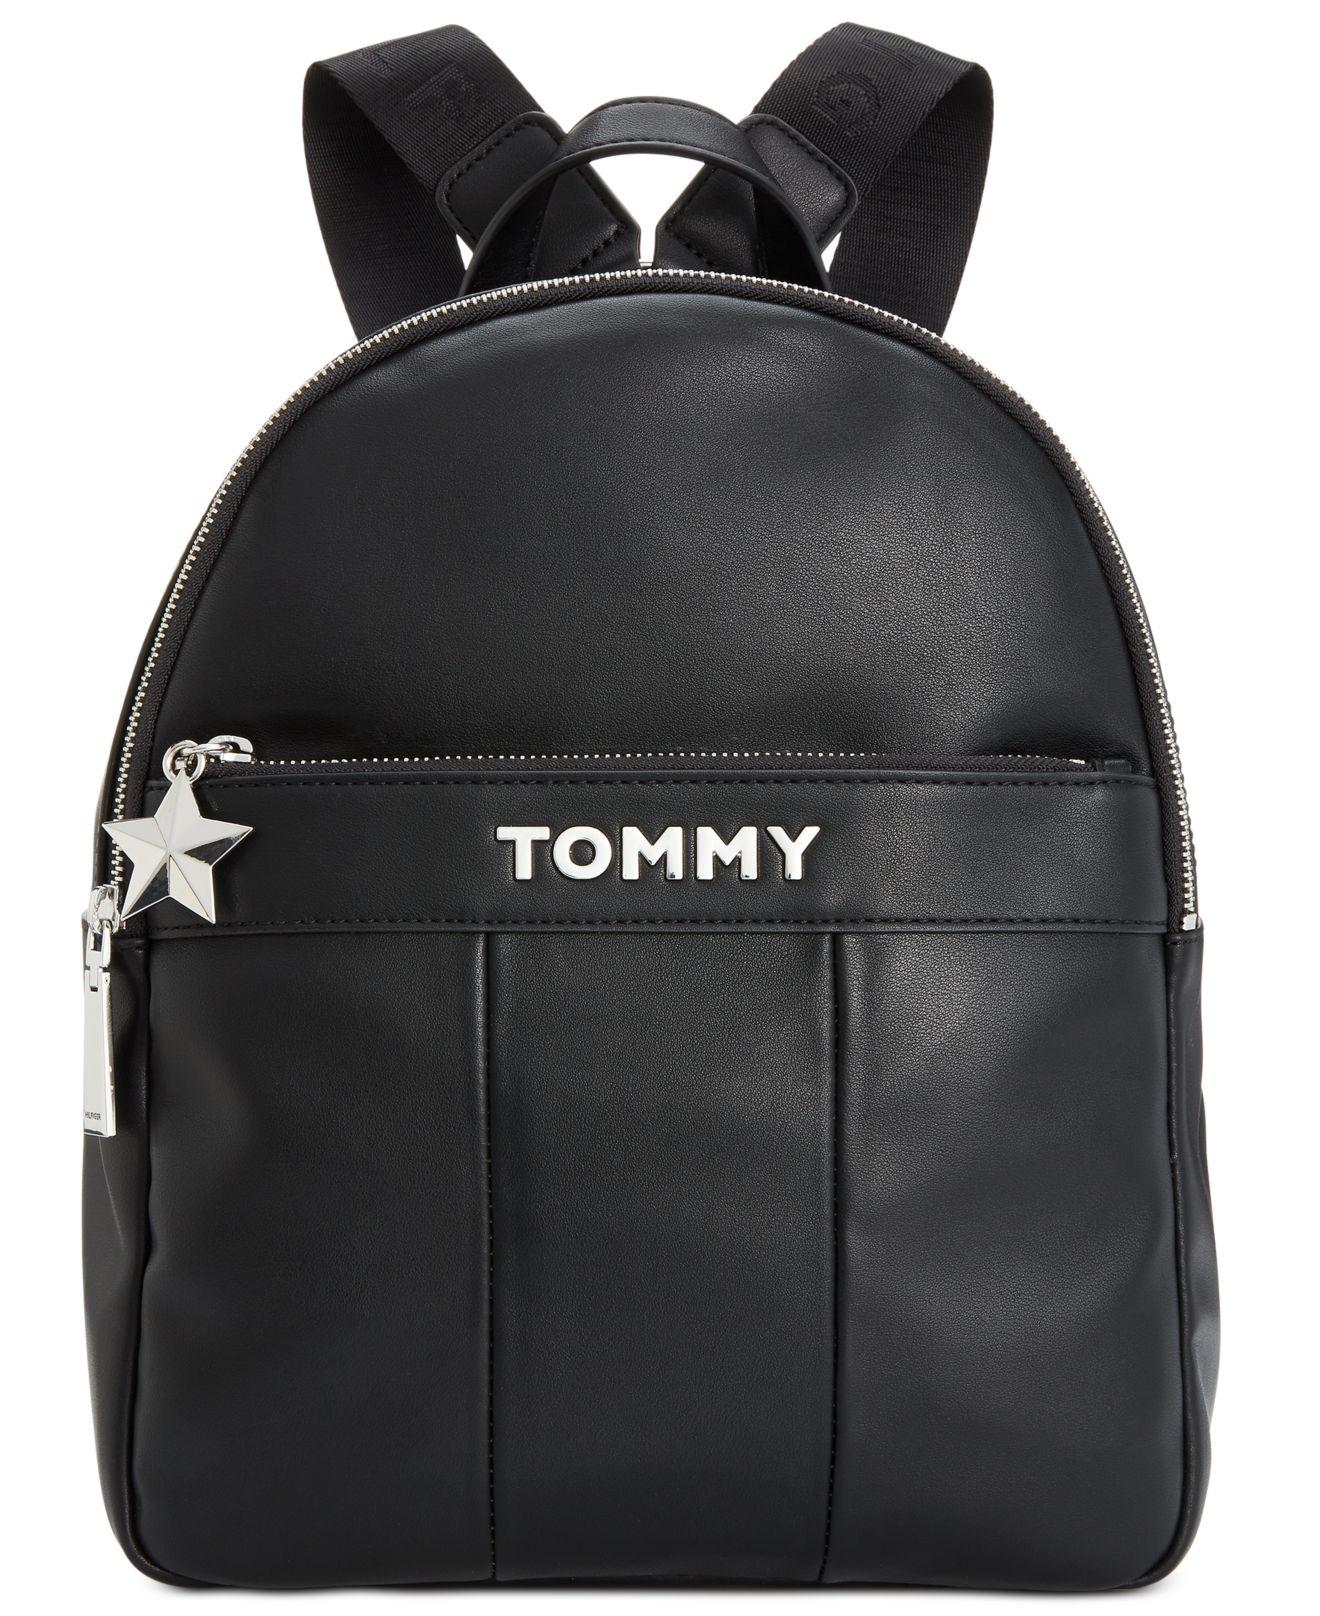 Tommy Hilfiger Peyton Backpack in Black 